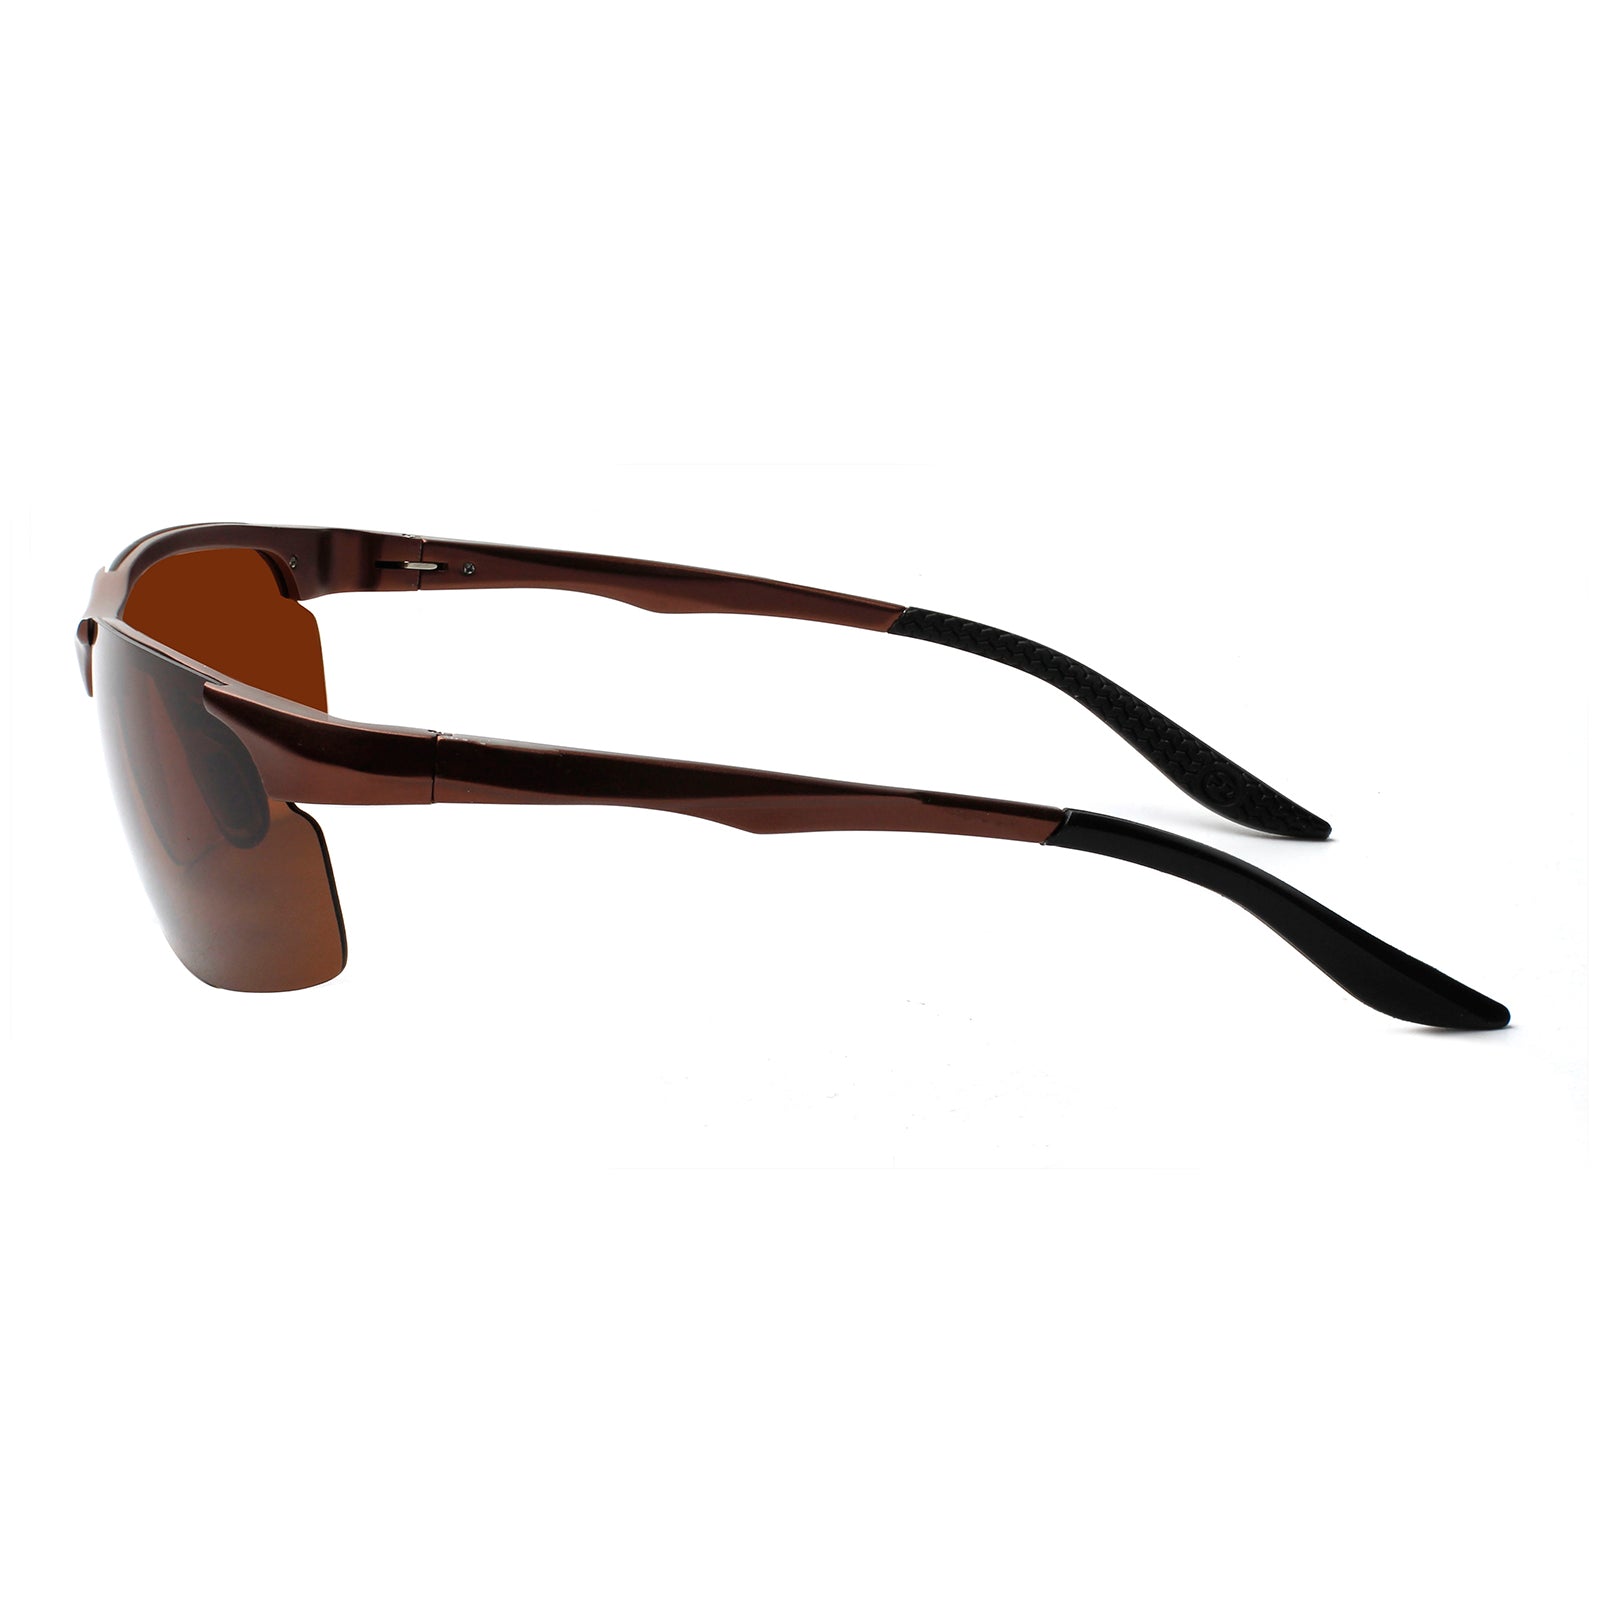 Mens Sports Polarized Sunglasses for Men - Al-Mg metal 8003